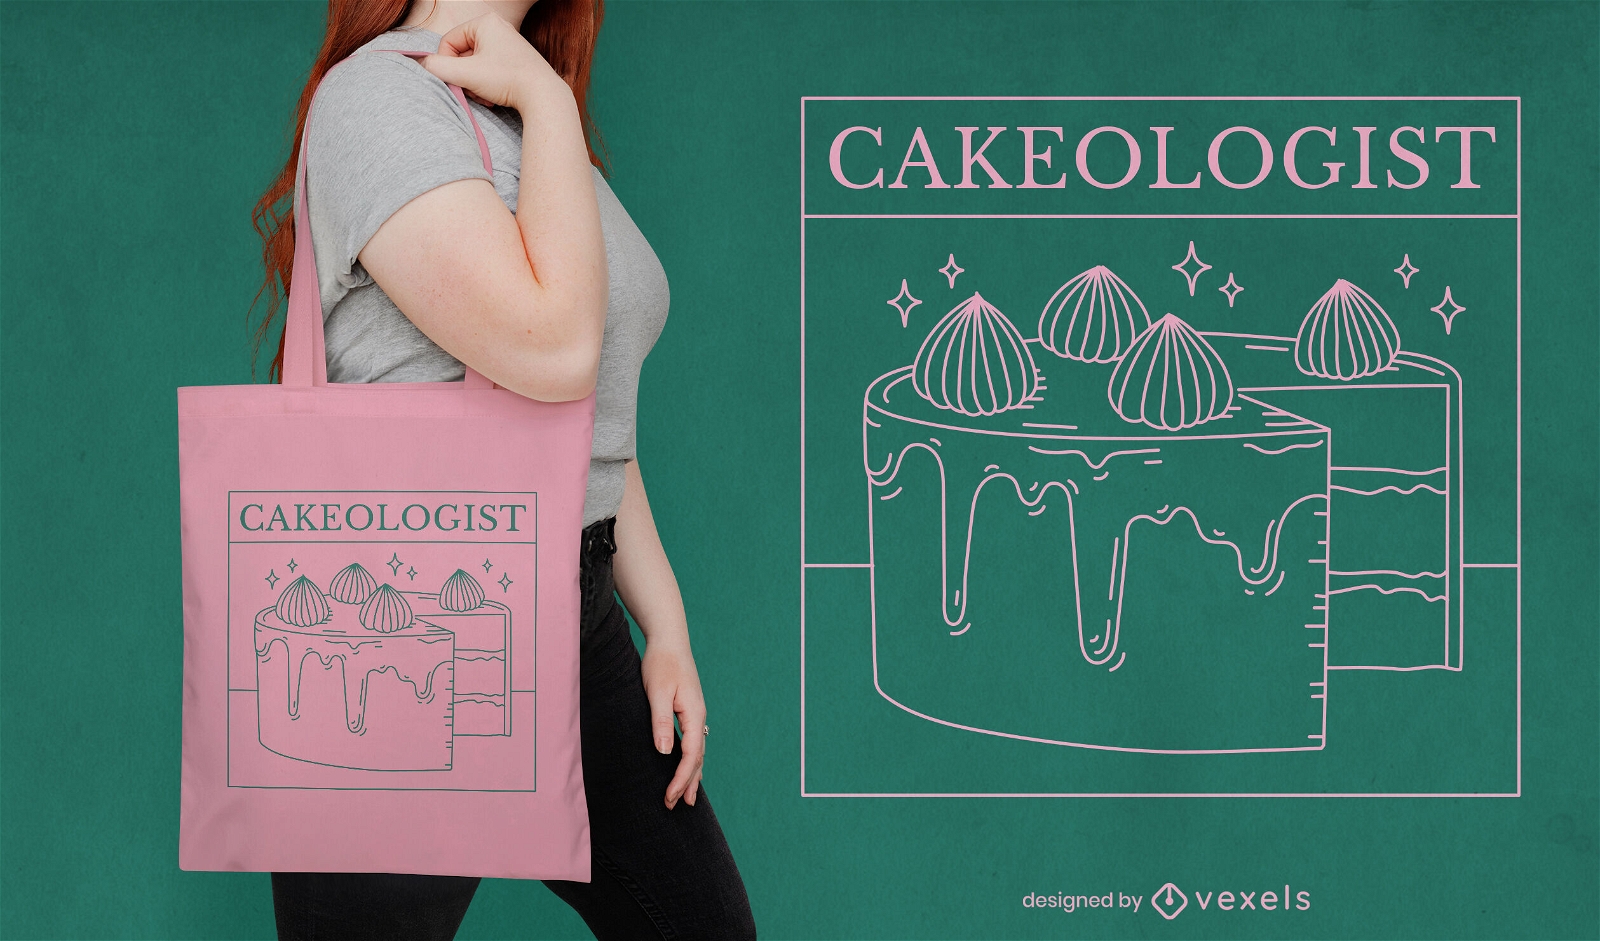 Cake specialist tote bag design